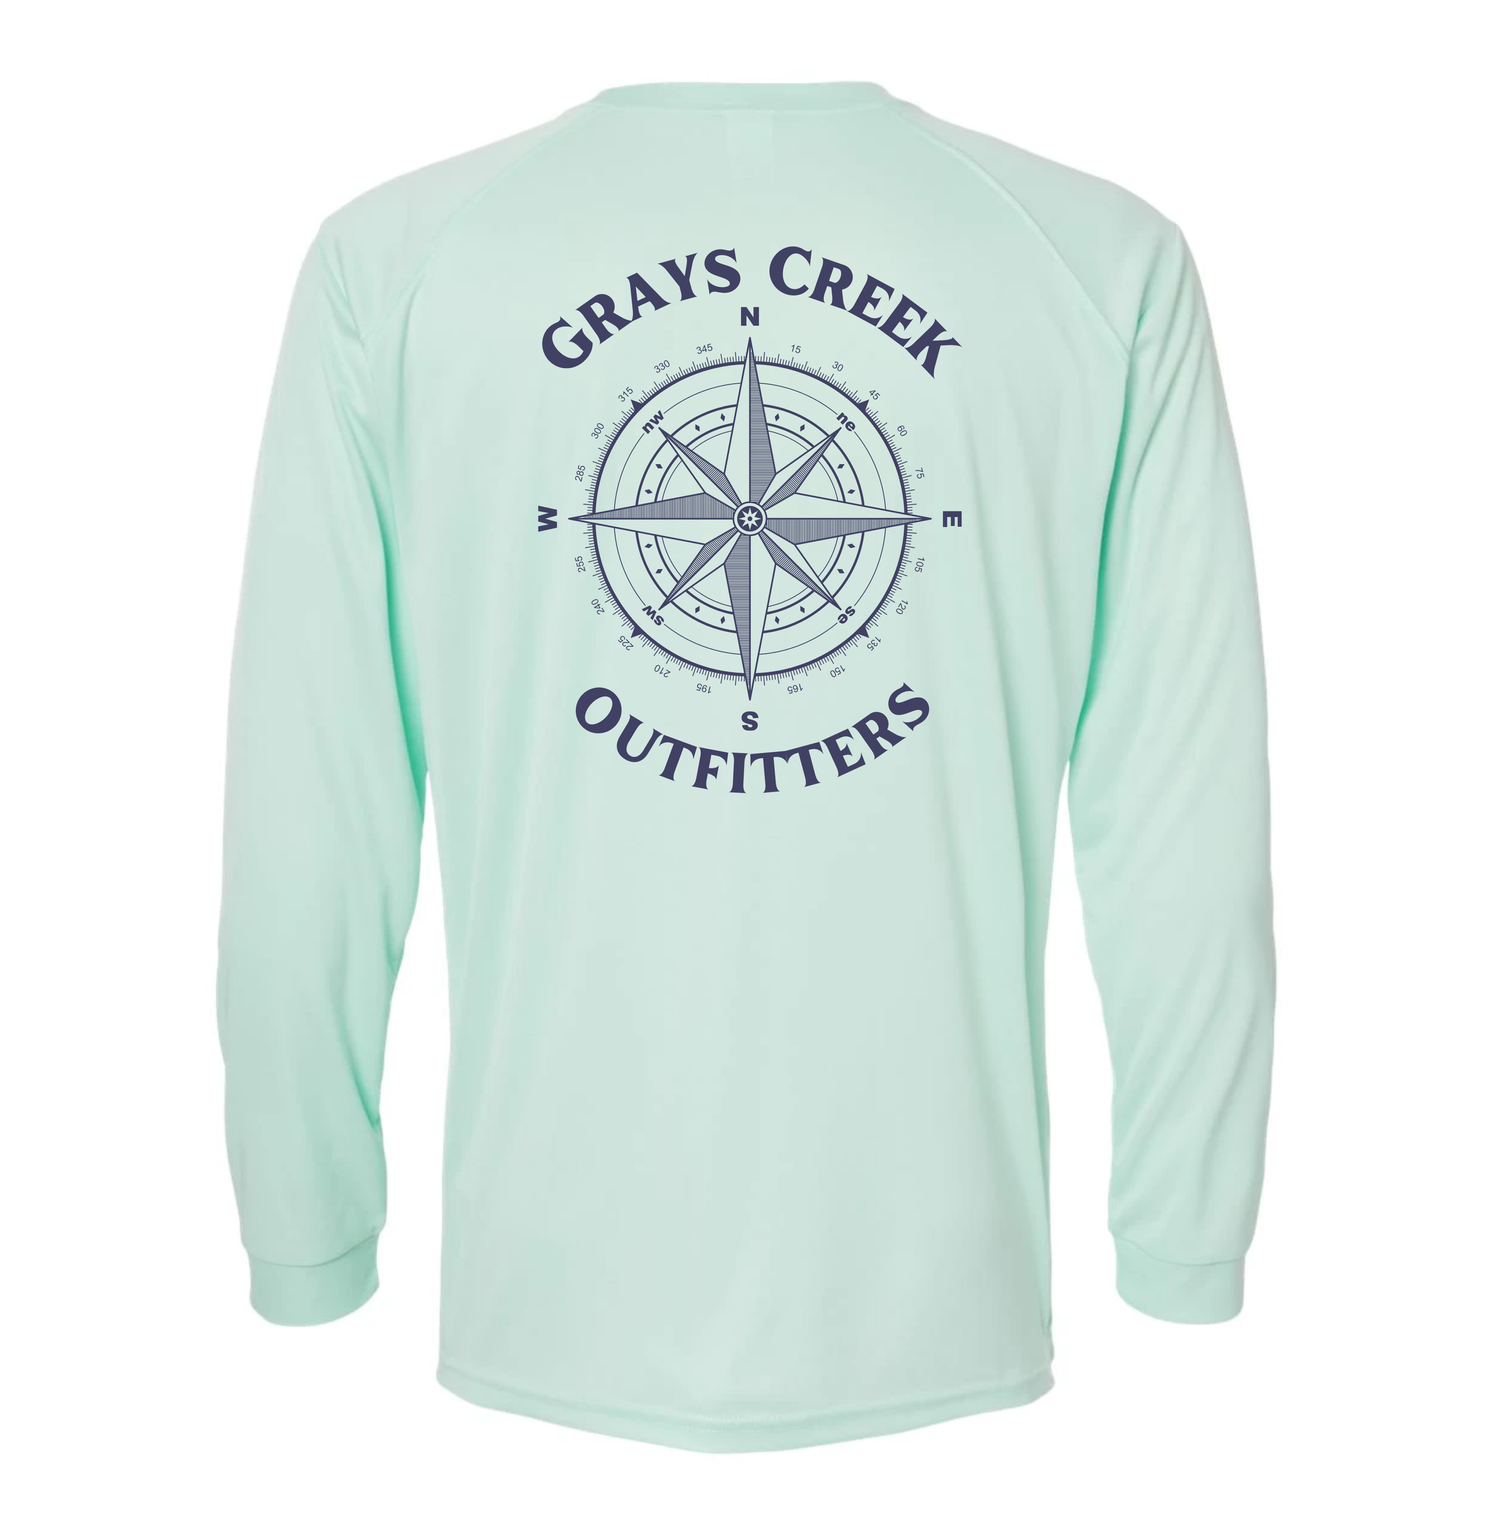 Creek Angler´s Device T shirts grey M